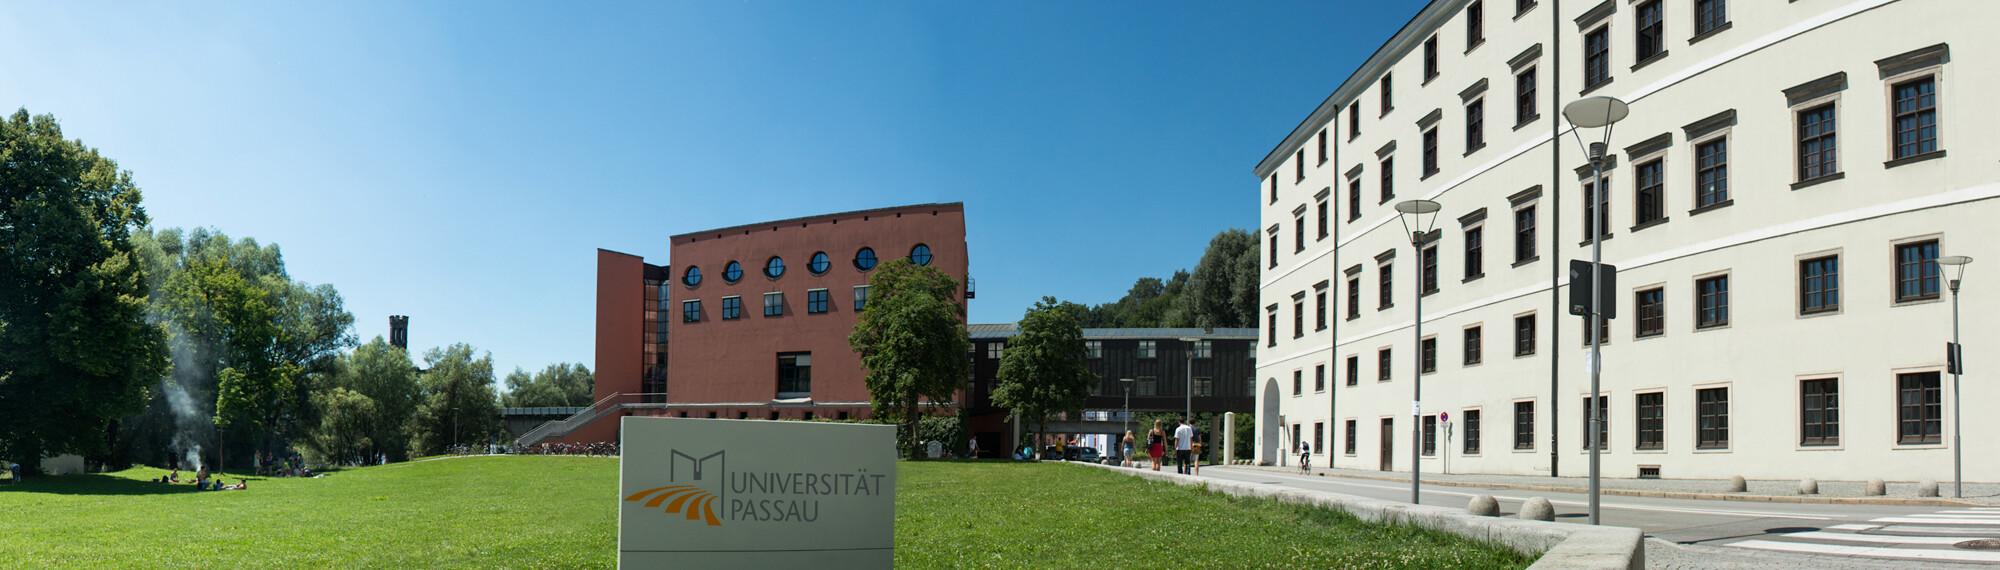 Jura an der Uni Passau studieren